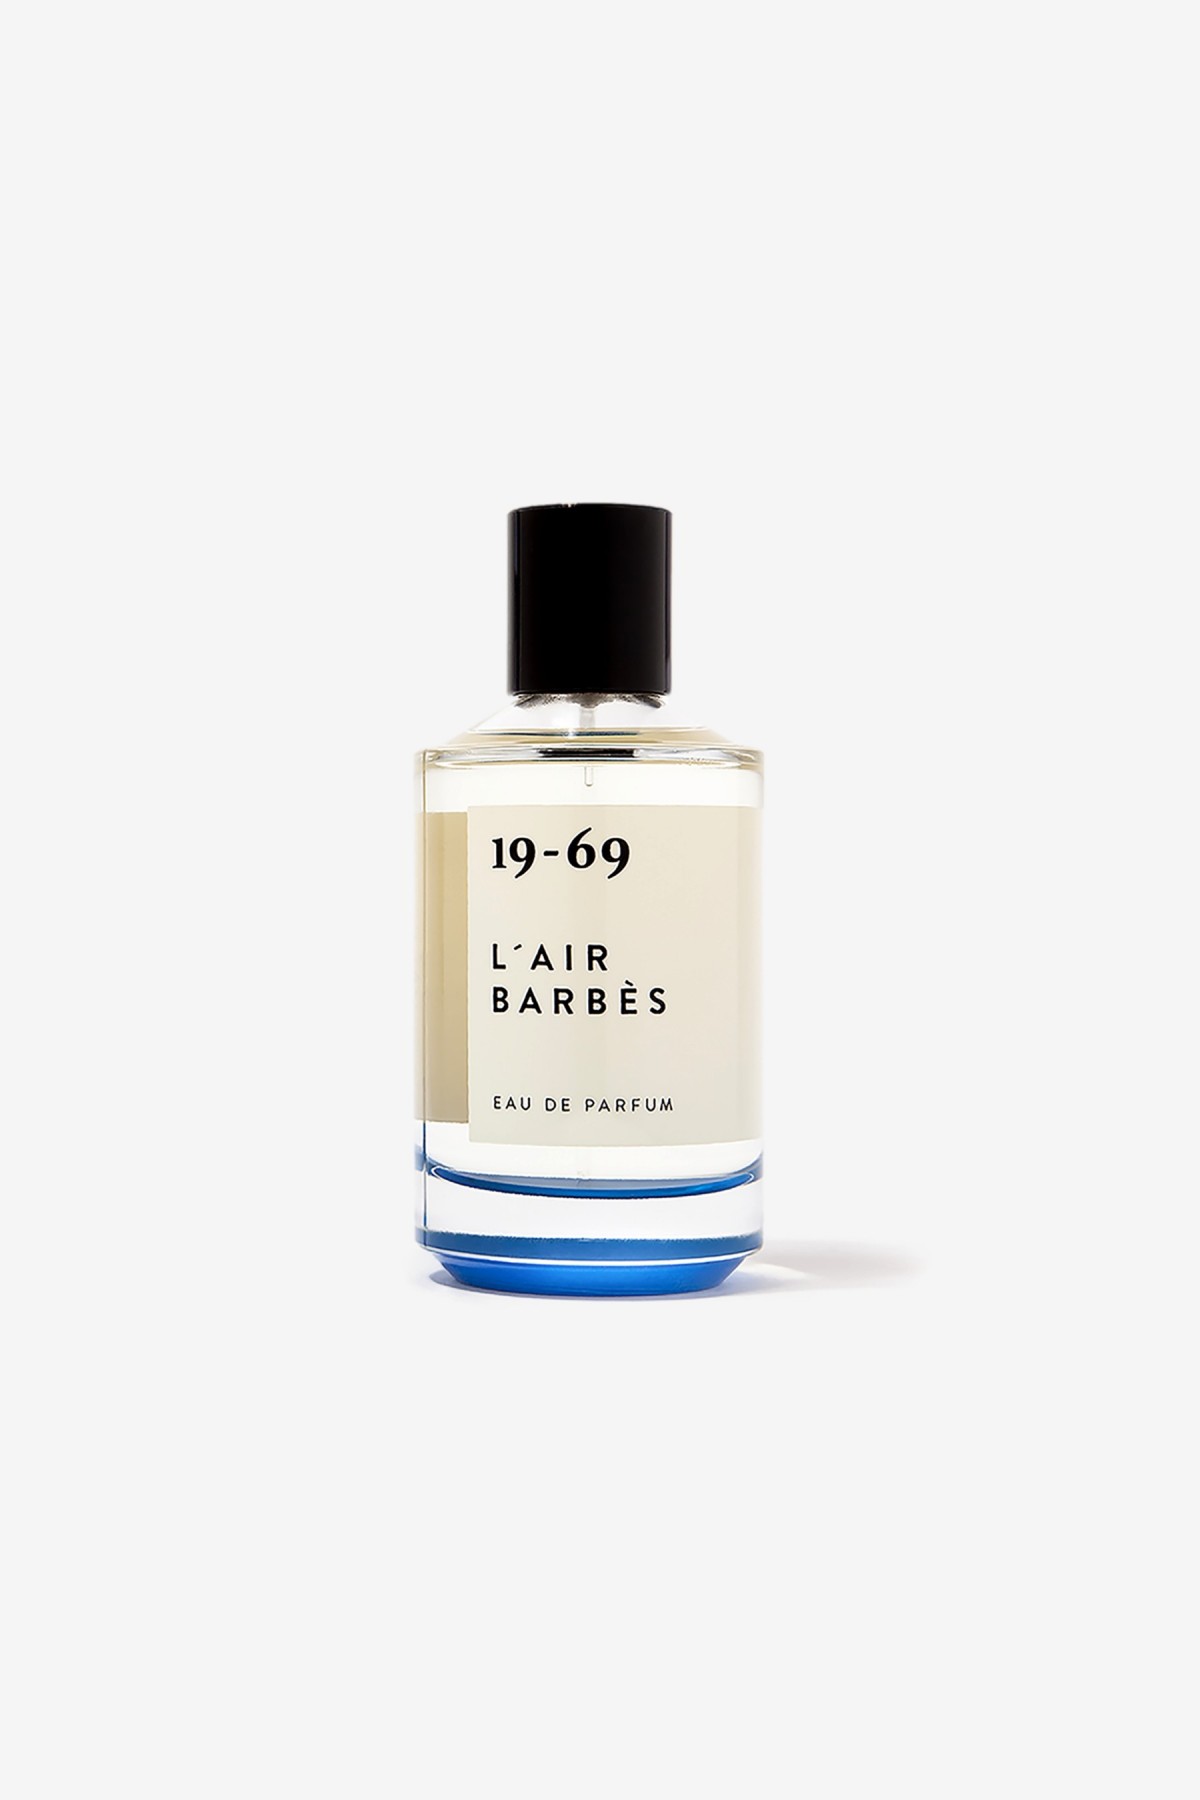 19-69 L'air Barbès Eau de Parfum in 100ml